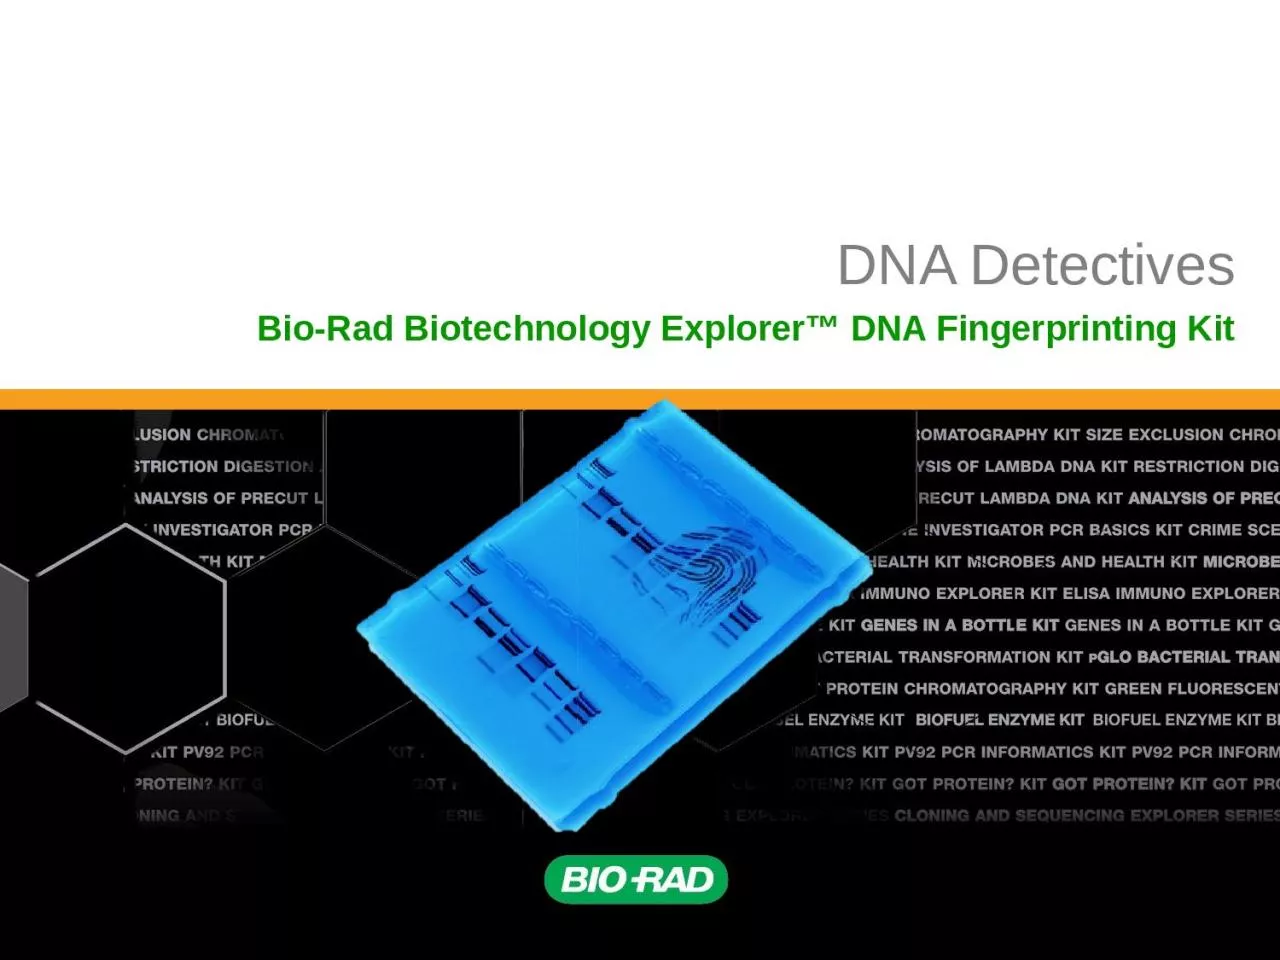 DNA Detectives Bio-Rad Biotechnology